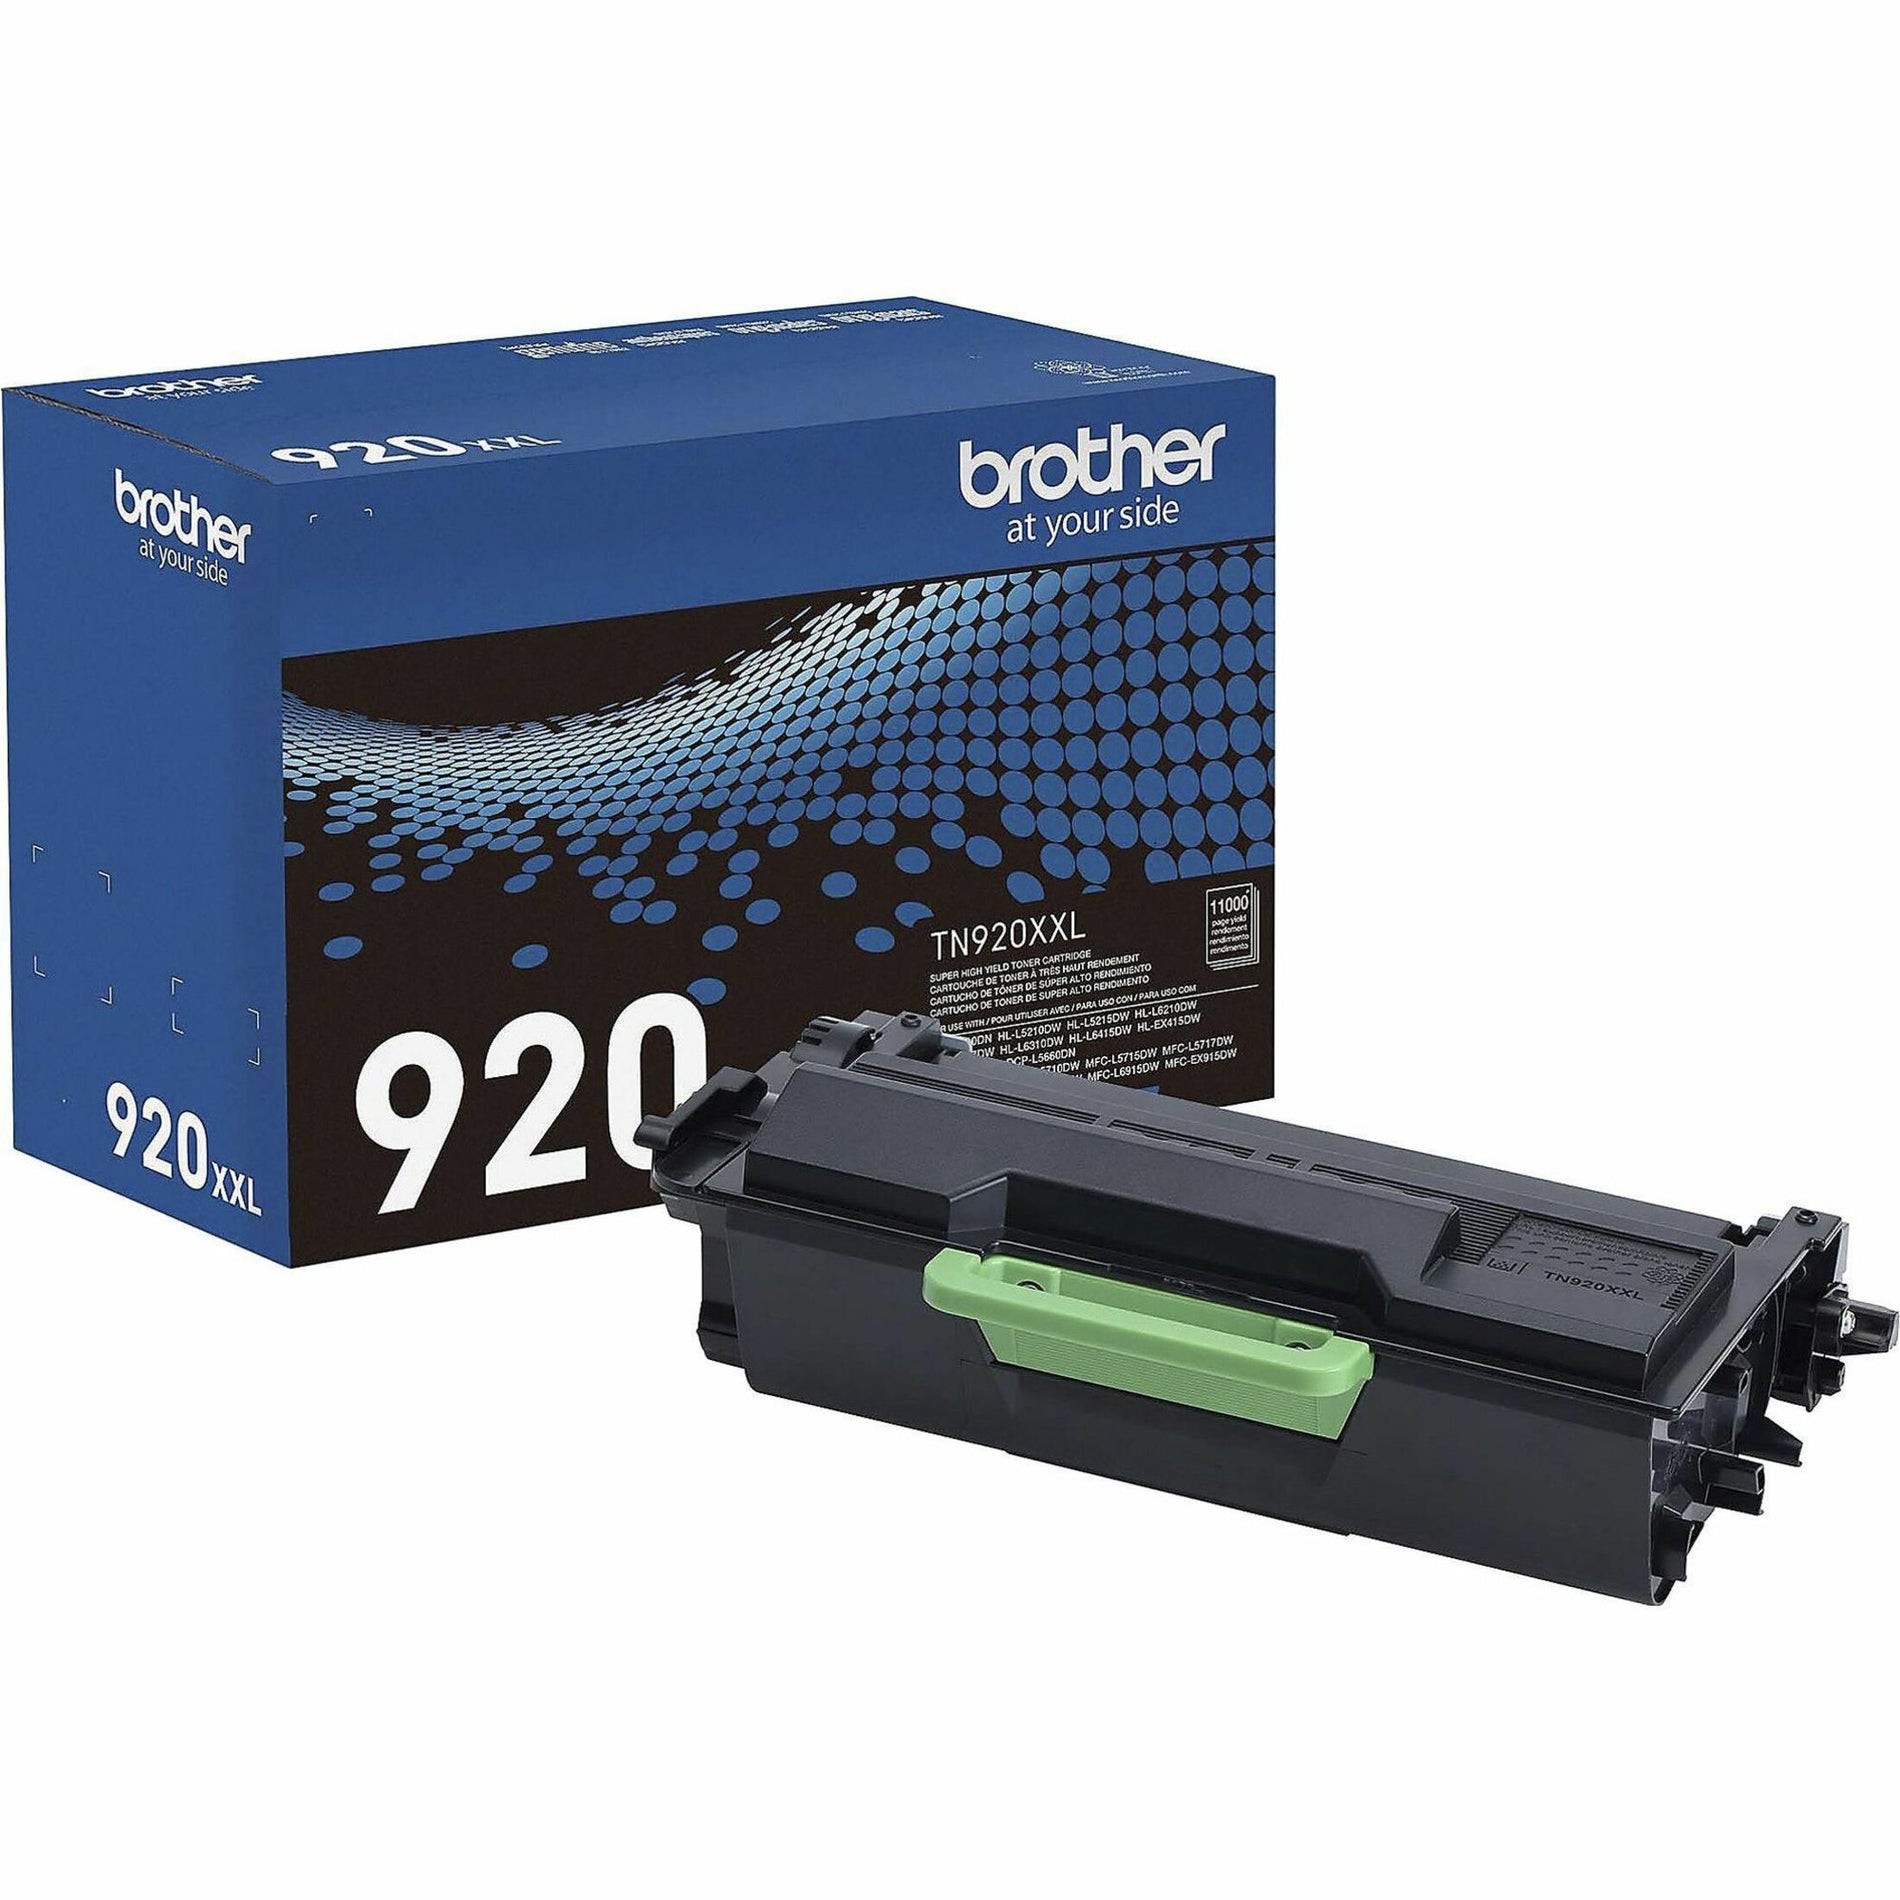 Brother TN920XXL Super High-yield Toner Cartridge - Genuine Black Toner for Brother Printers